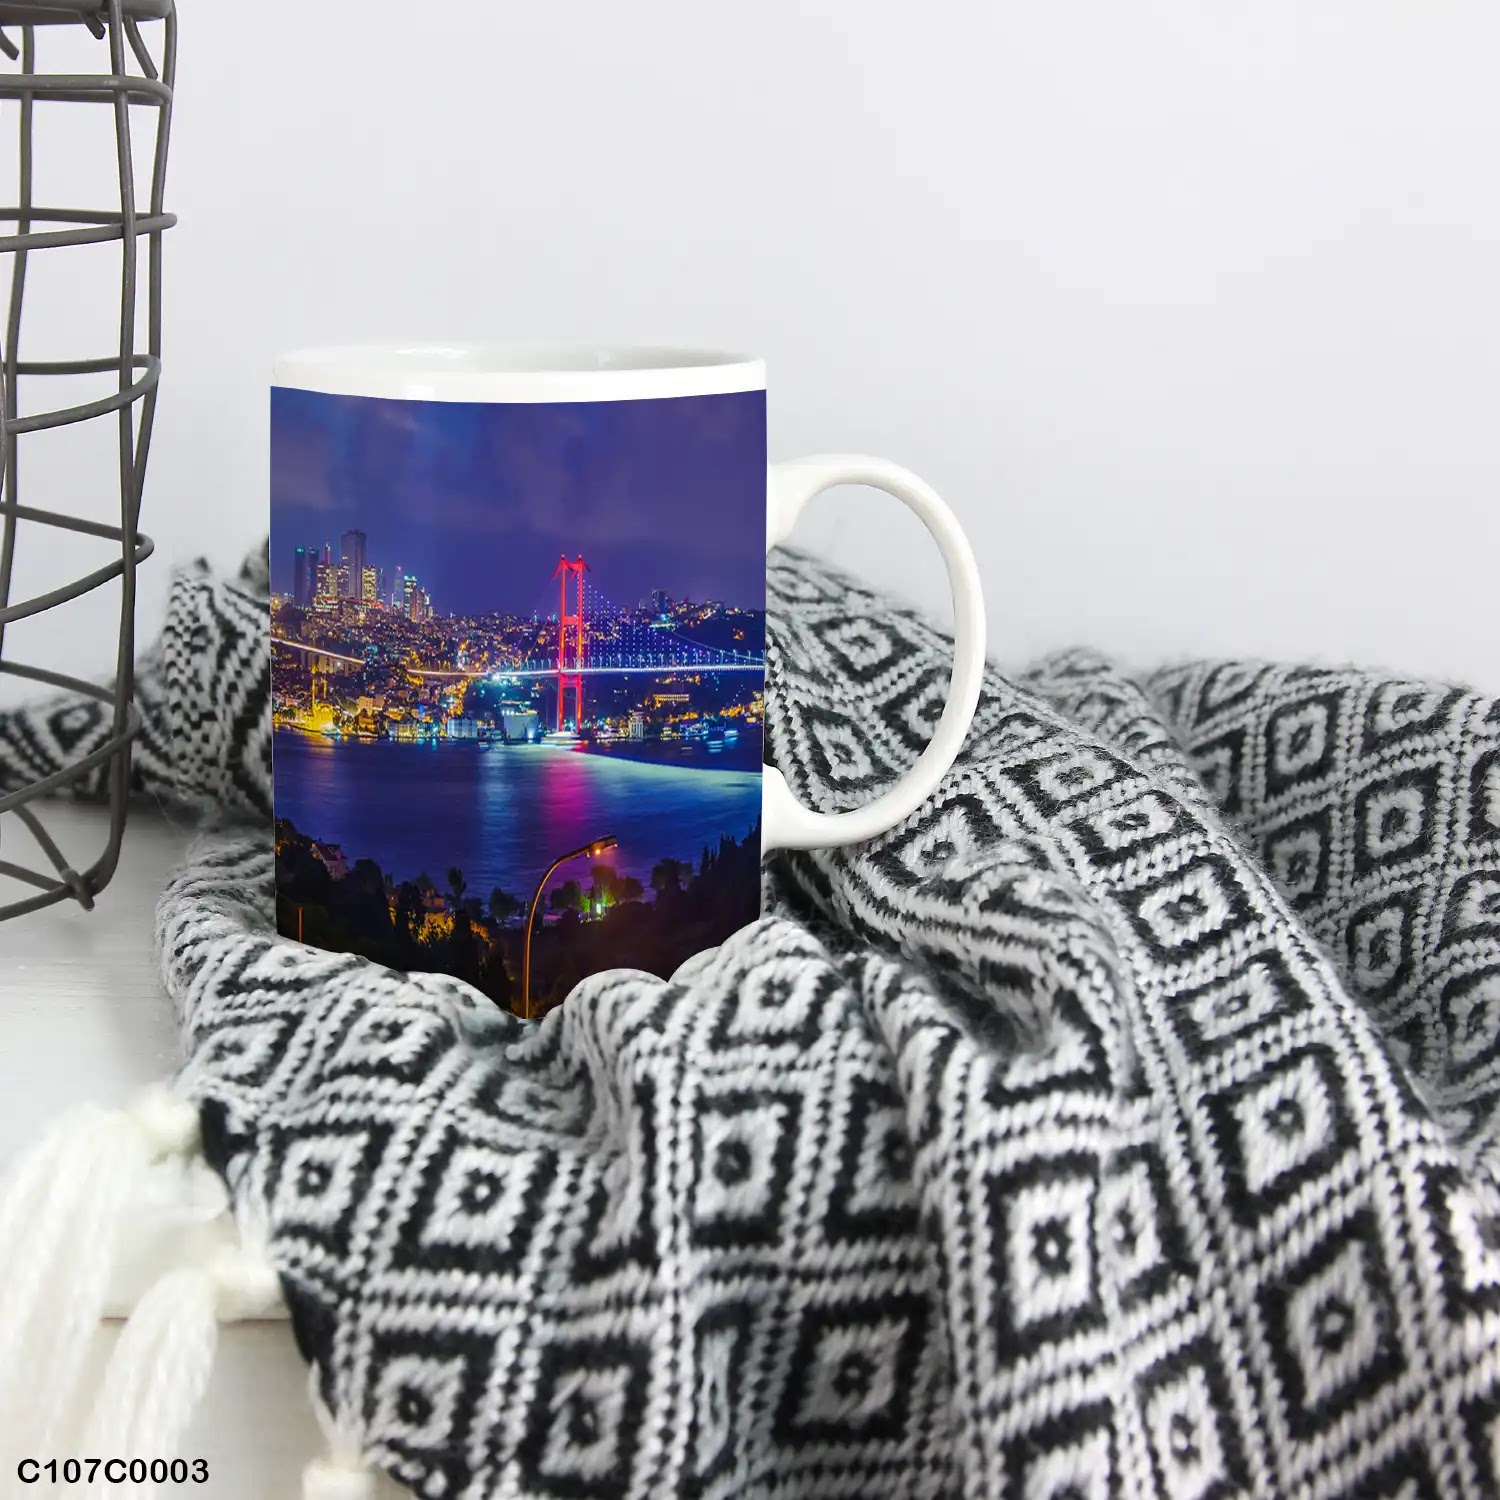 A mug (cup) printed with an image of Bosphorus Bridge at night